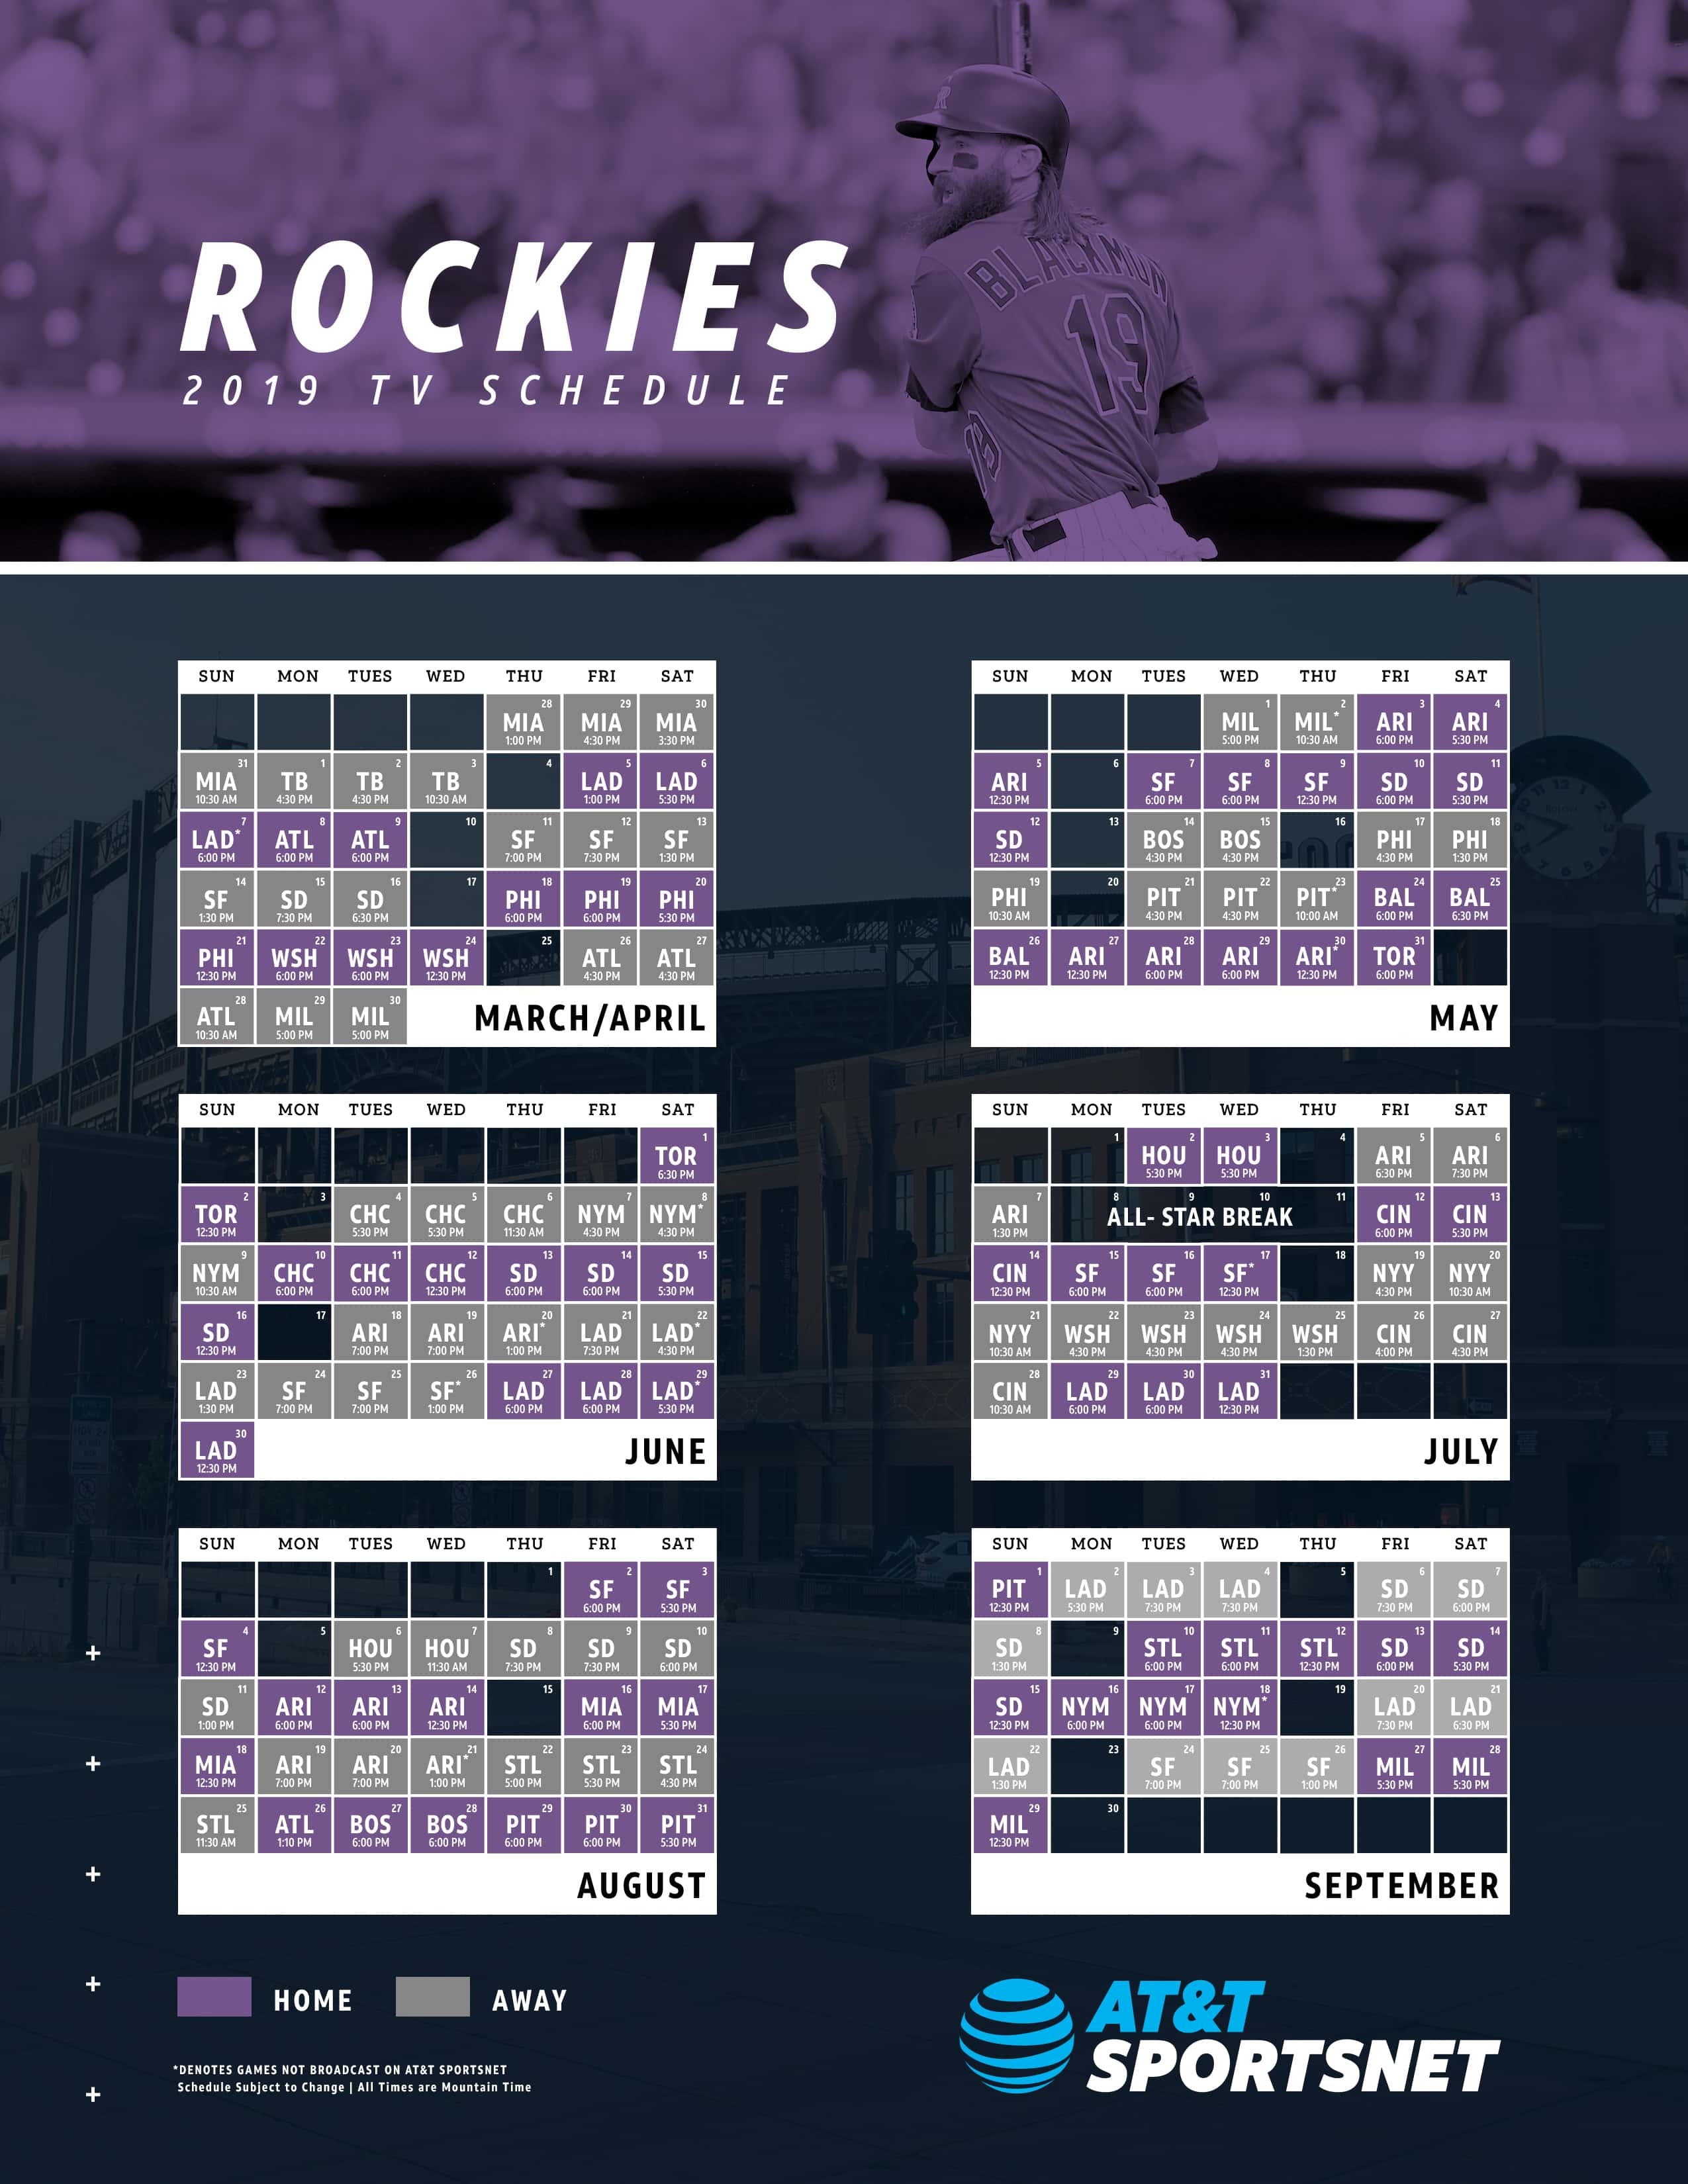 Rockies Opening Day 2019 Schedule - change comin